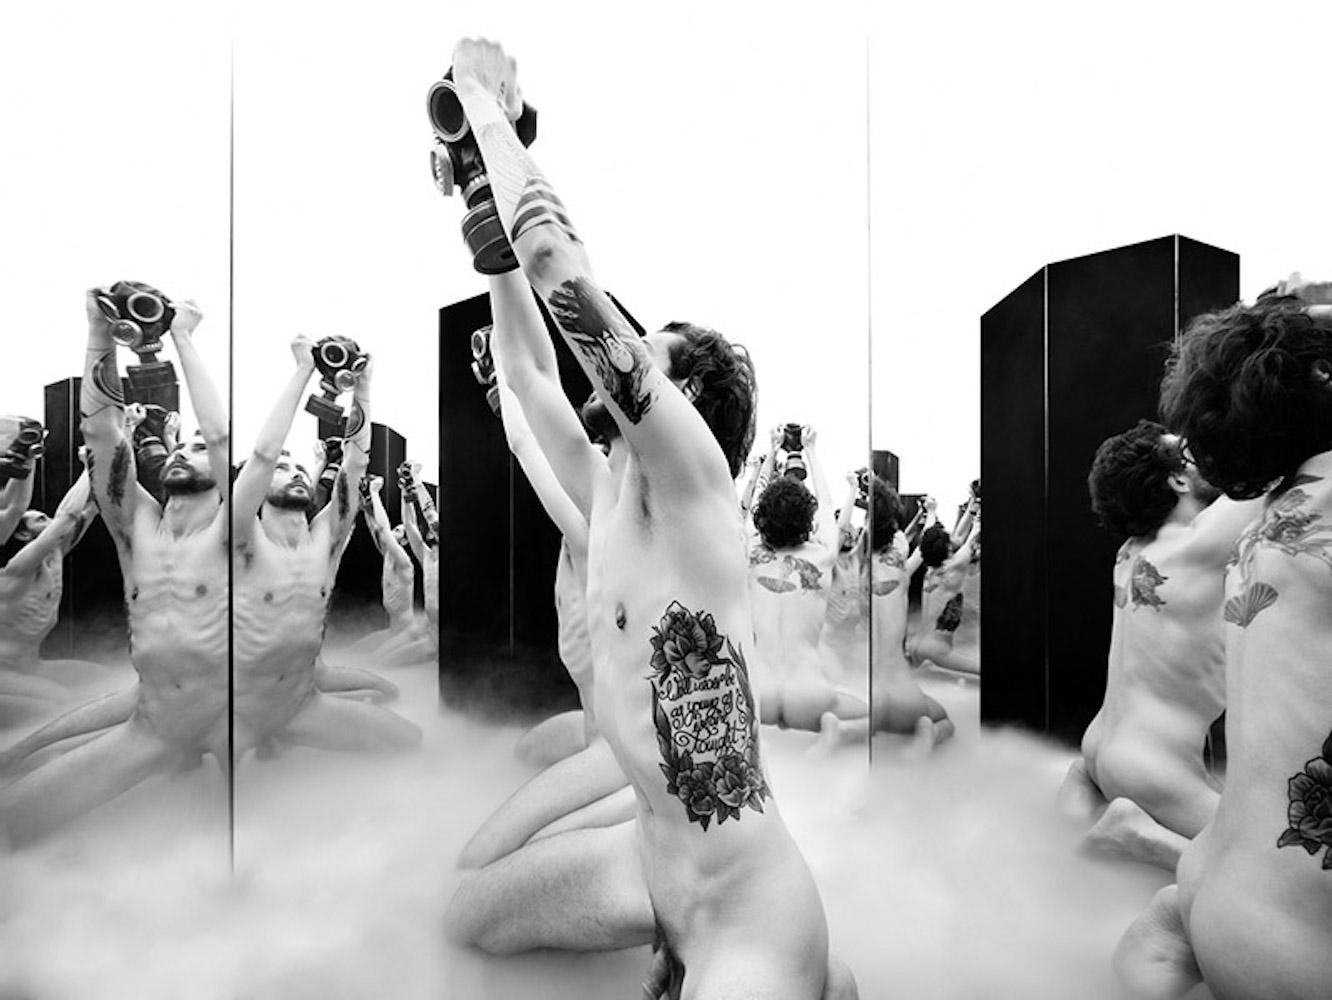 Koray Erkaya Nude Photograph - Invacuo Project #31. B&W Portrait inspired by the Gezi Park resistance movement